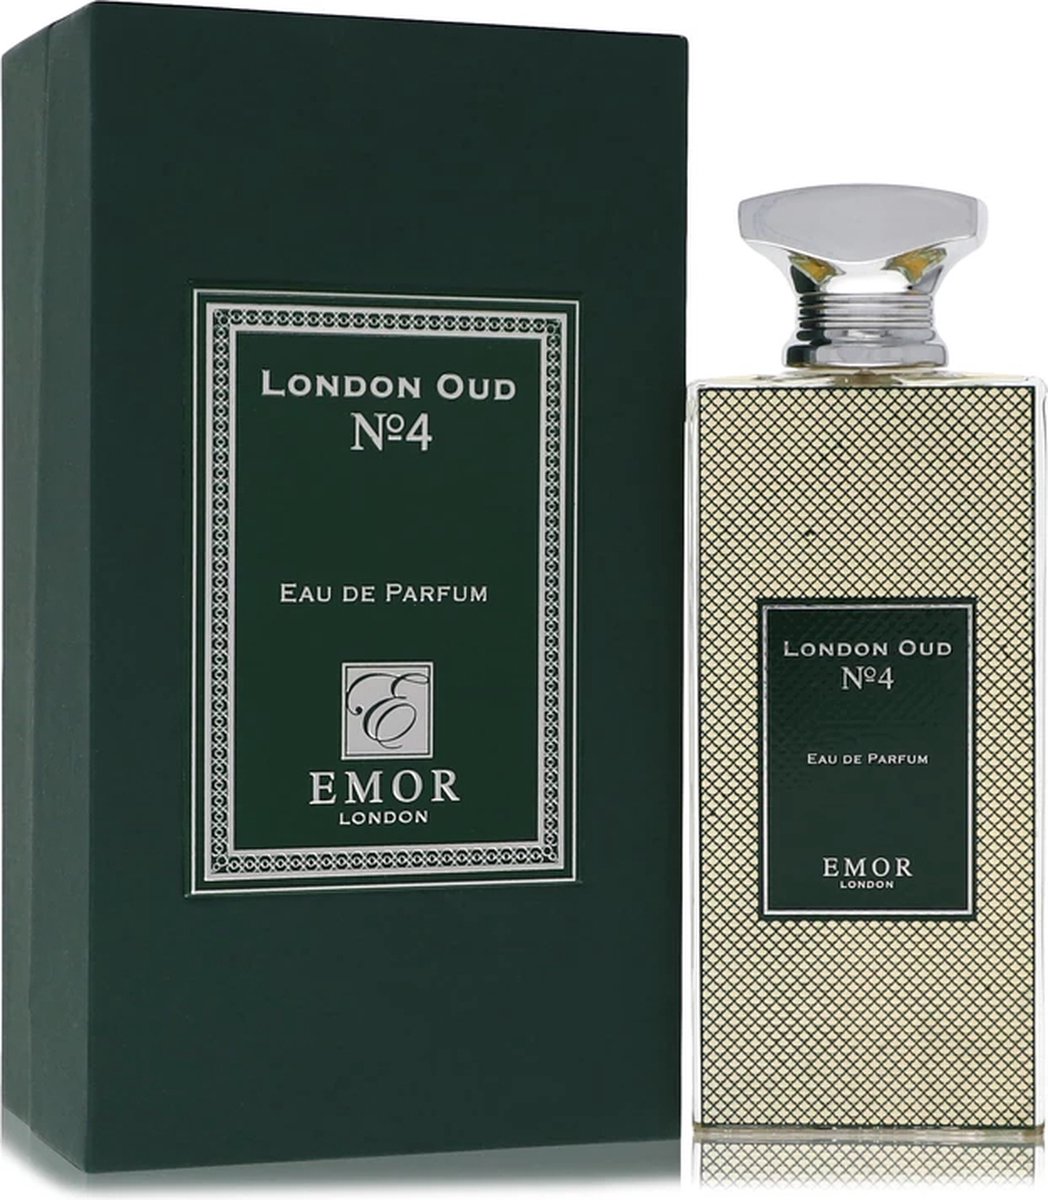 Emor London Oud No. 4 eau de parfum spray 125 ml